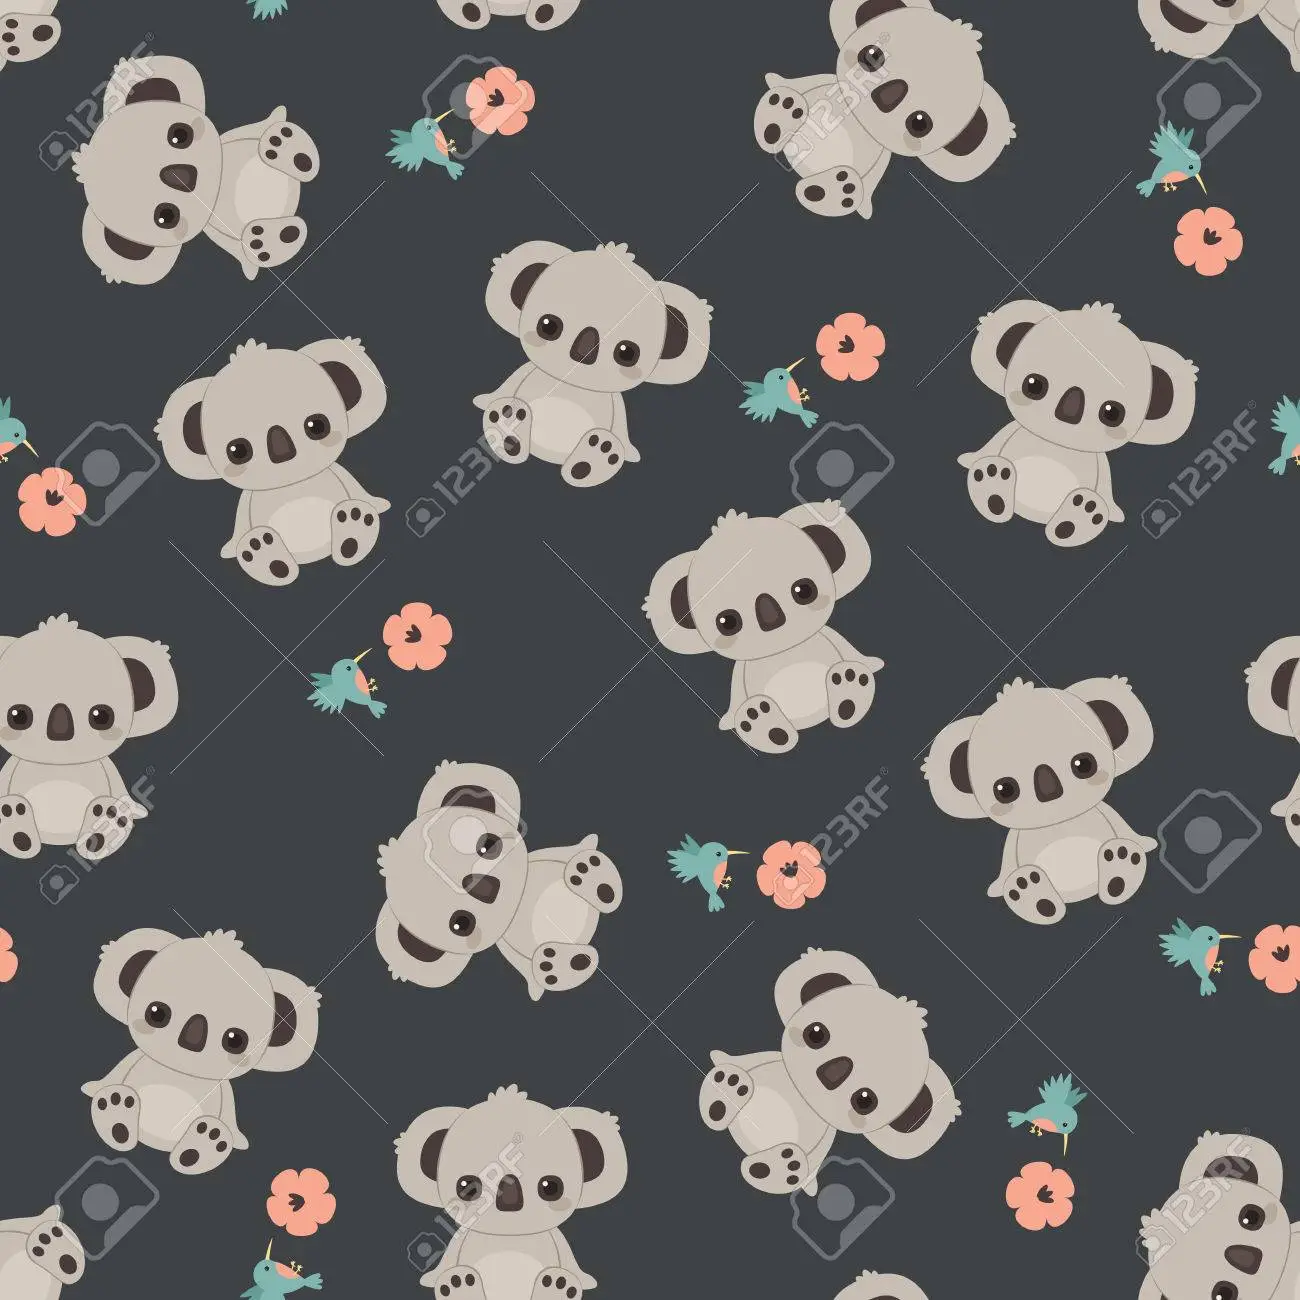 Cute Koala Fabric, Wallpaper and Home Decor